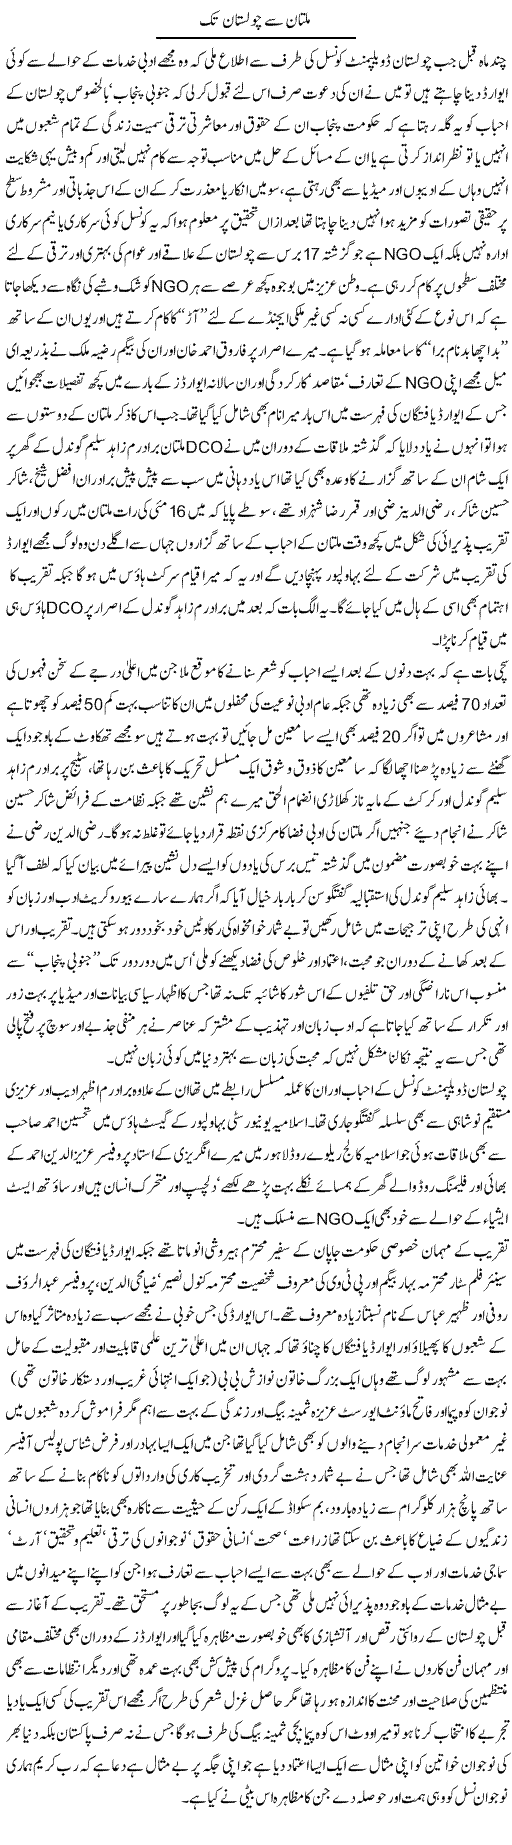 Multan se Cholistan tak by Amjad islam Amjad